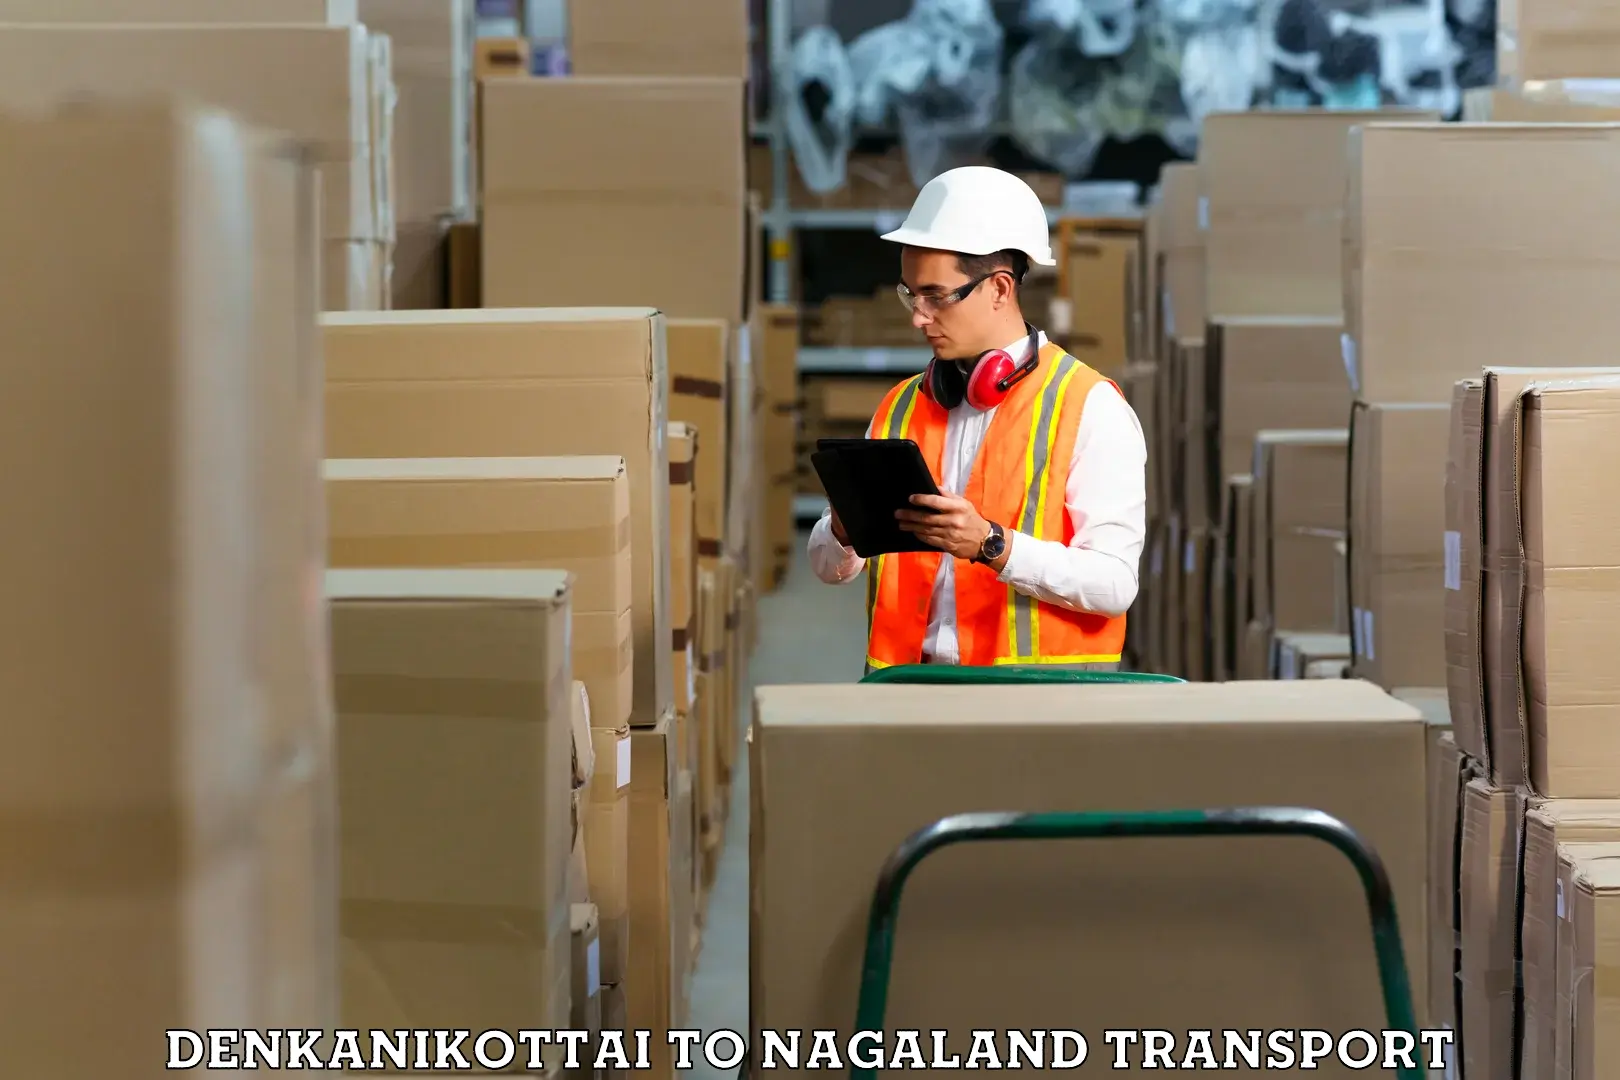 Transport in sharing Denkanikottai to Nagaland